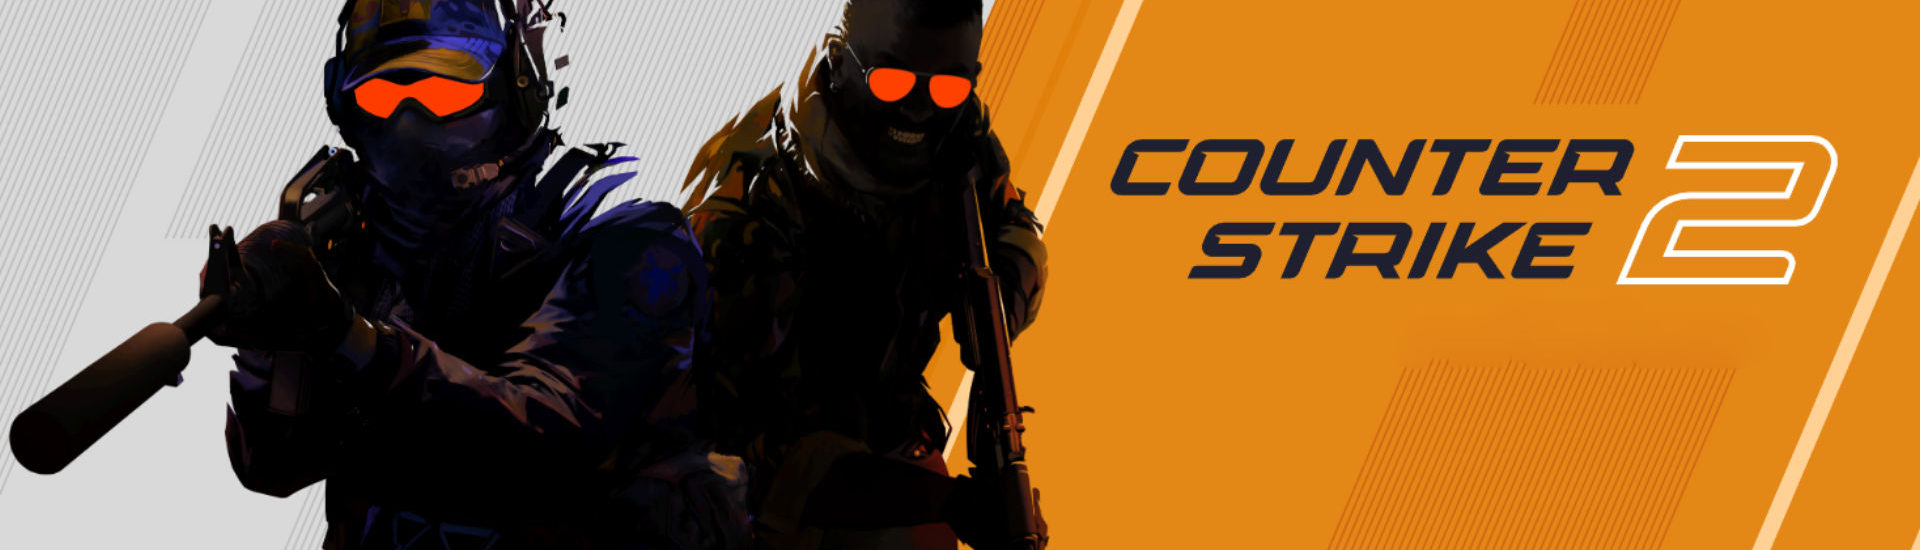 Counter-Strike 2: CS:GO bekommt ein Upgrade